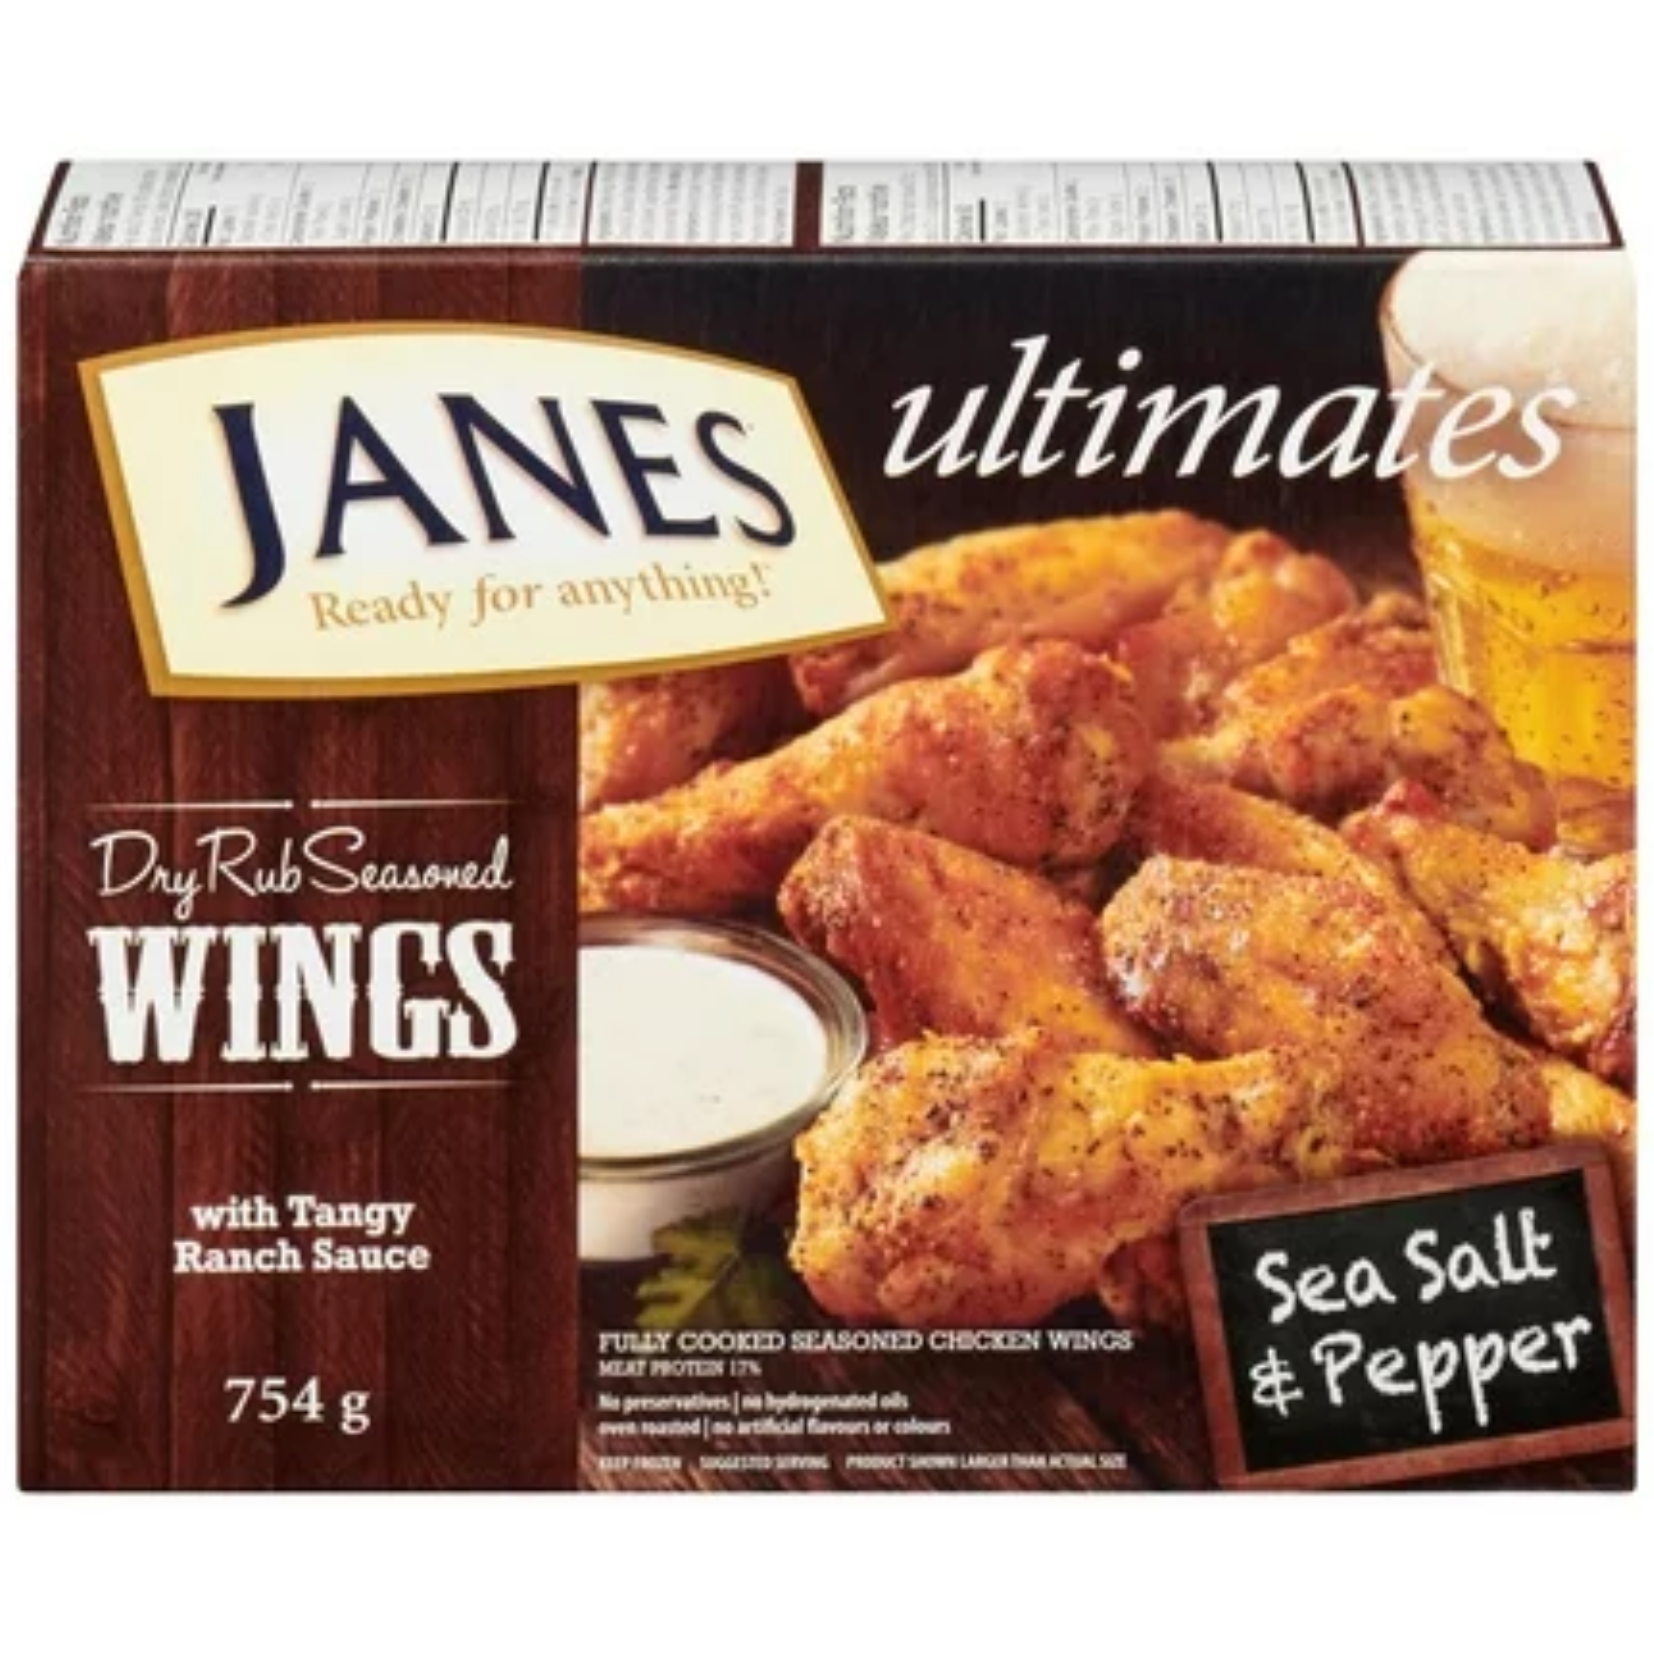 Janes Dry Rub Seasoned Chicken Wings Sea Salt & Pepper 754g